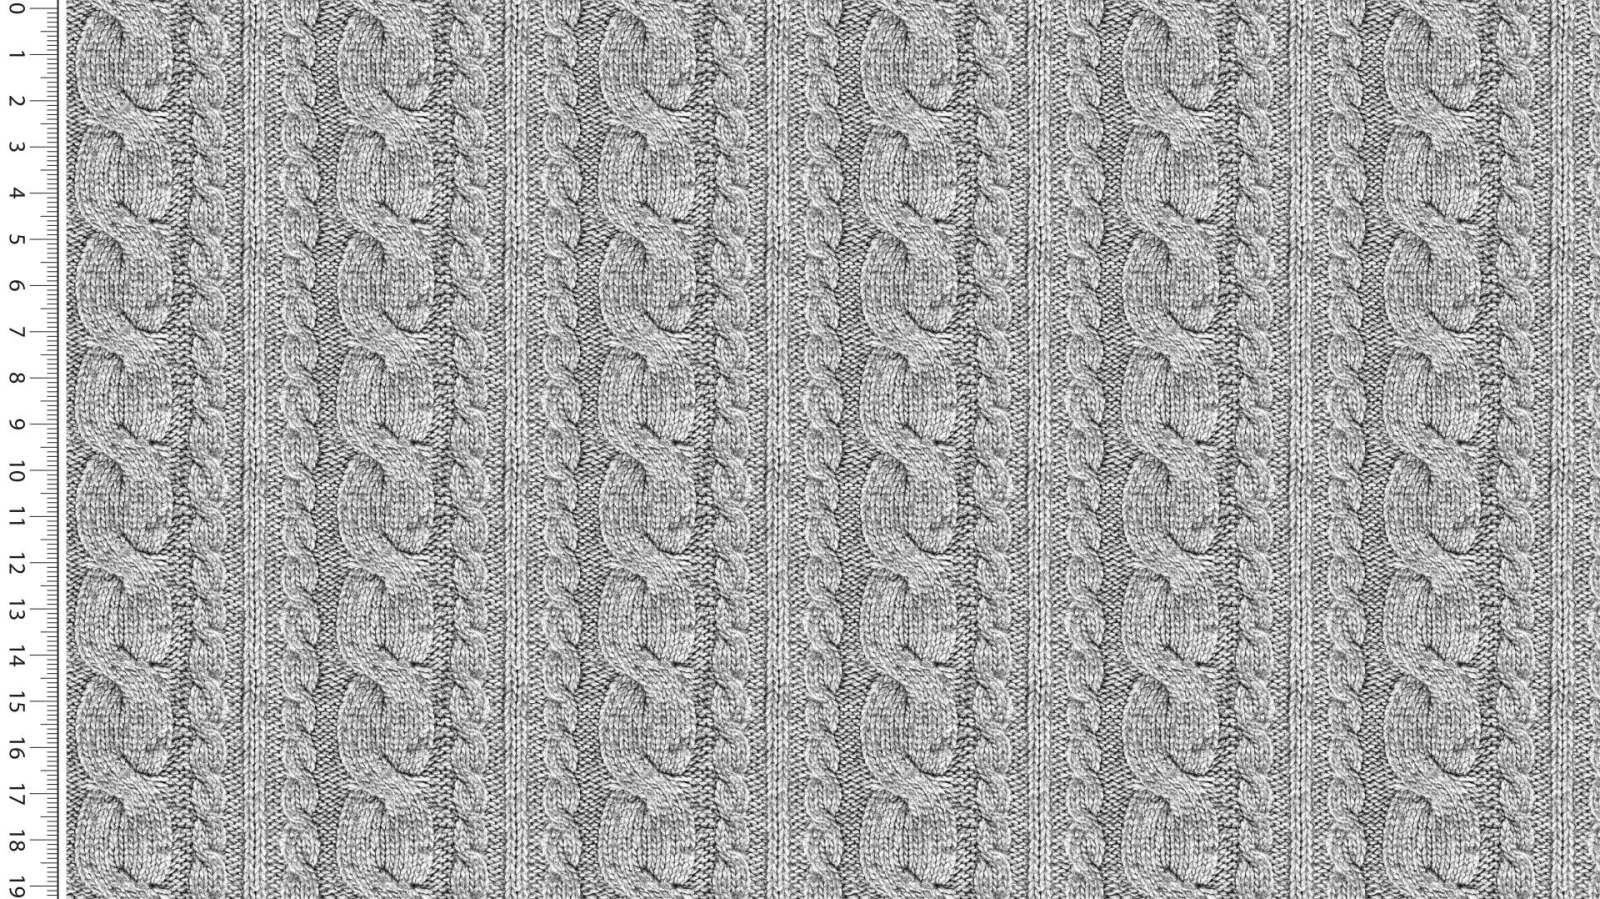 05m Sommersweat French Terry Sweat Digitaldruck Zopf Strick Muster hellgrau